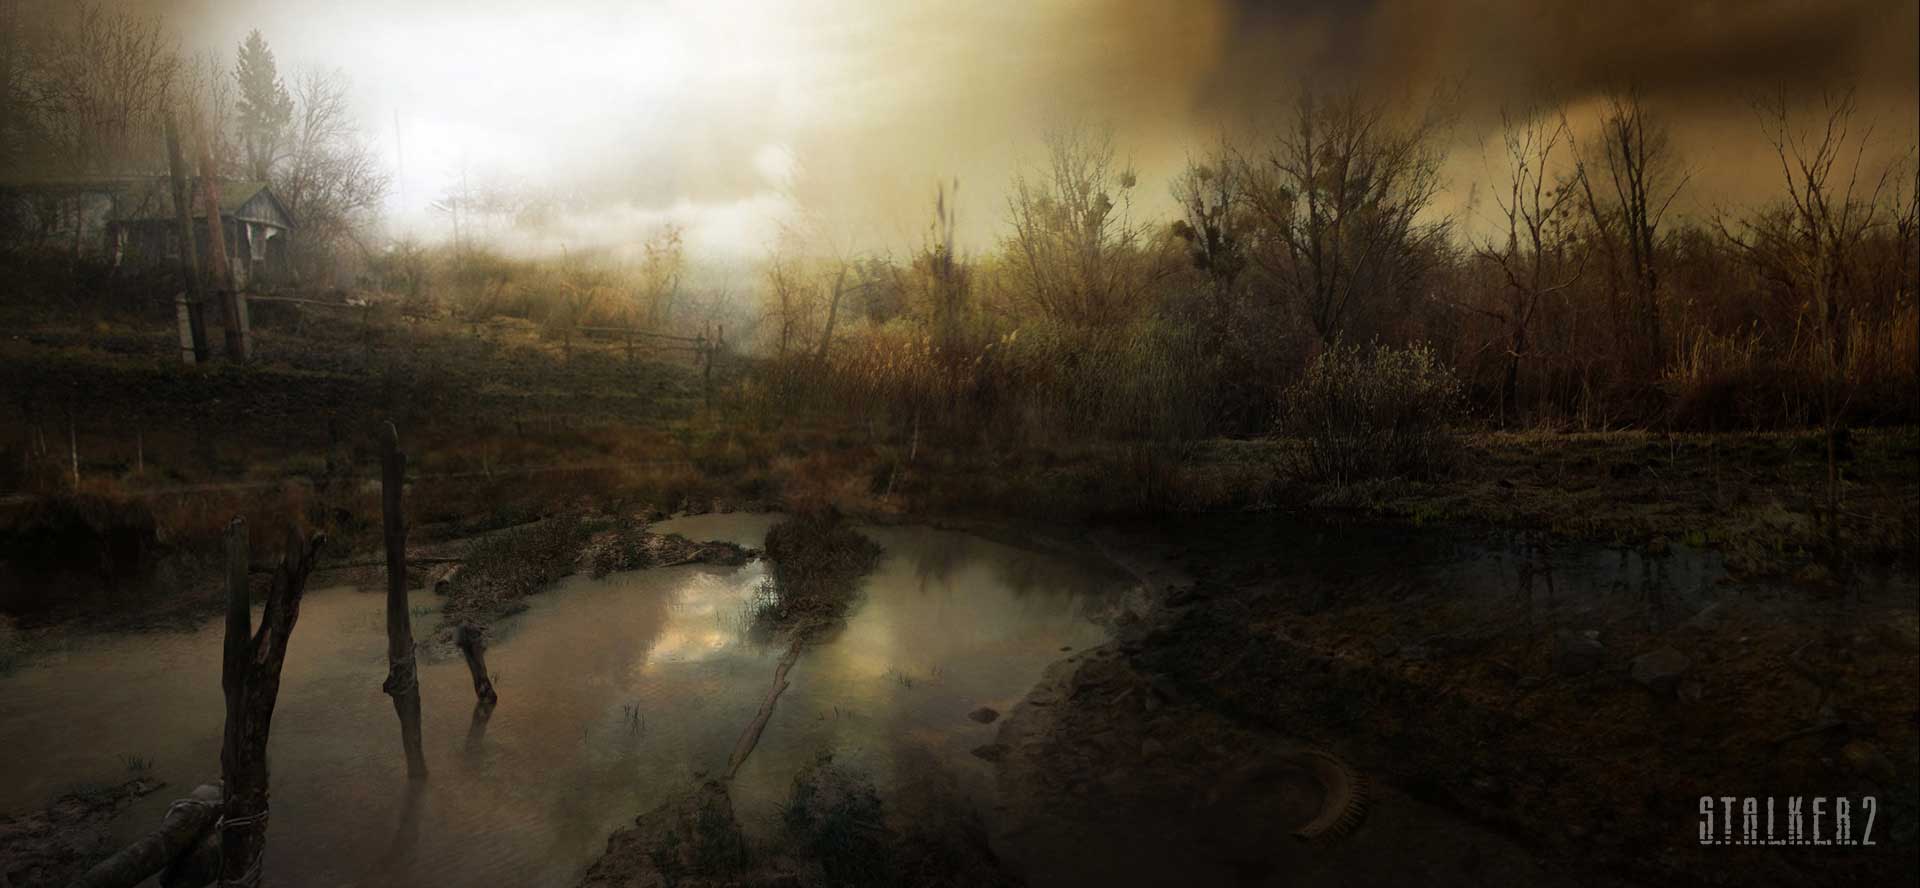 دریاچه و جنگل مسموم زیر نور آفتاب بازی Stalker 2